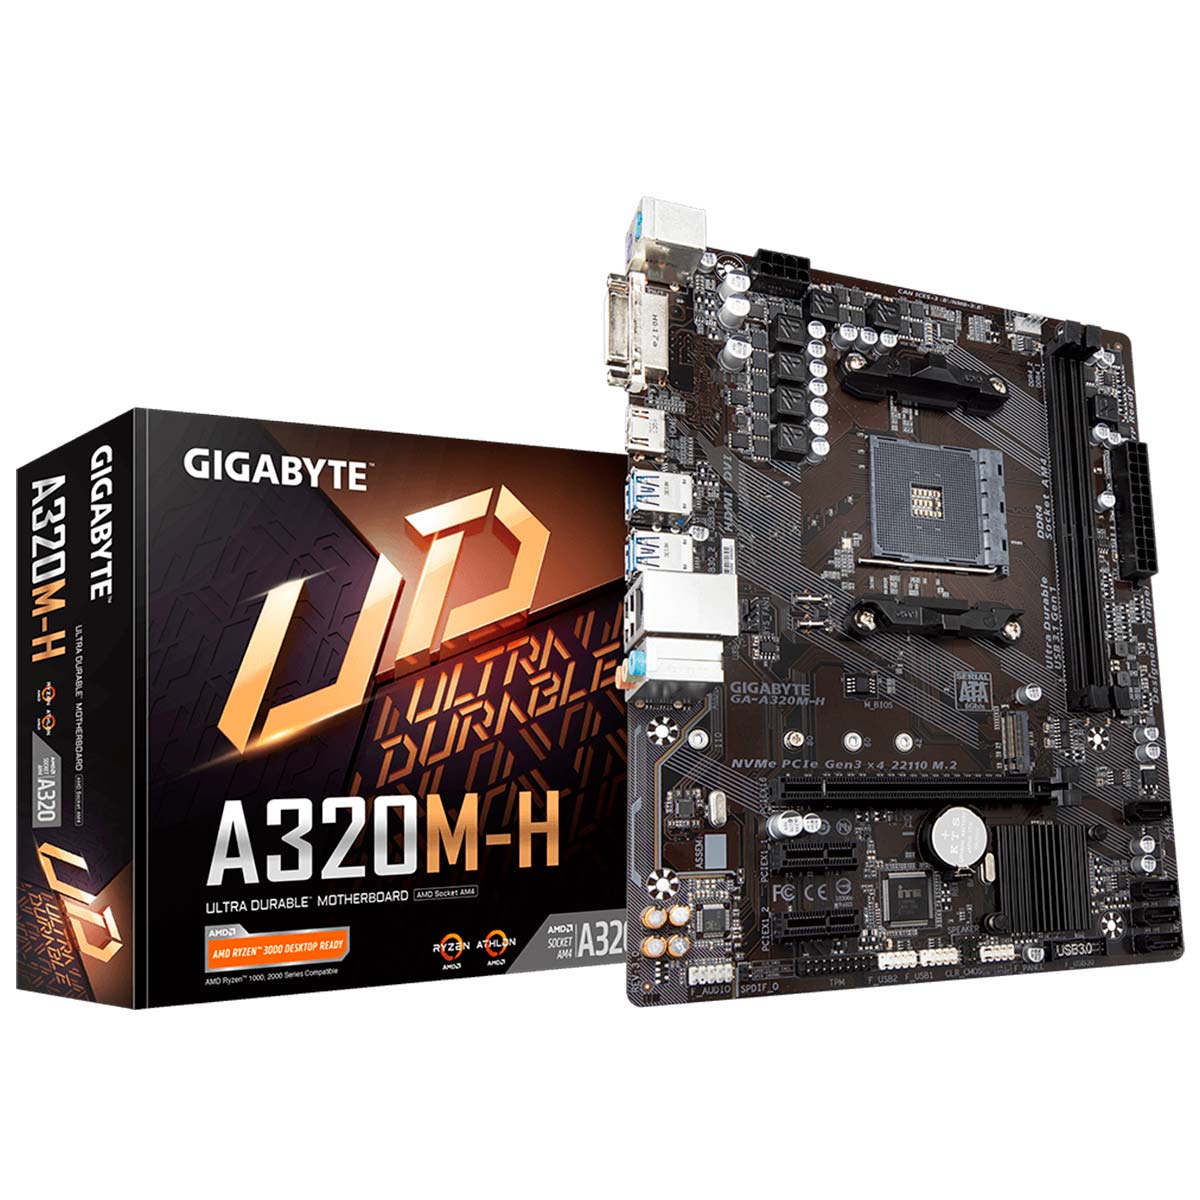 Gigabyte GA-A320M-H Rev 3 (AM4 DDR4 3200 O.C) - Chipset AMD 320 - USB 3.1 - Slot M.2 - Micro ATX